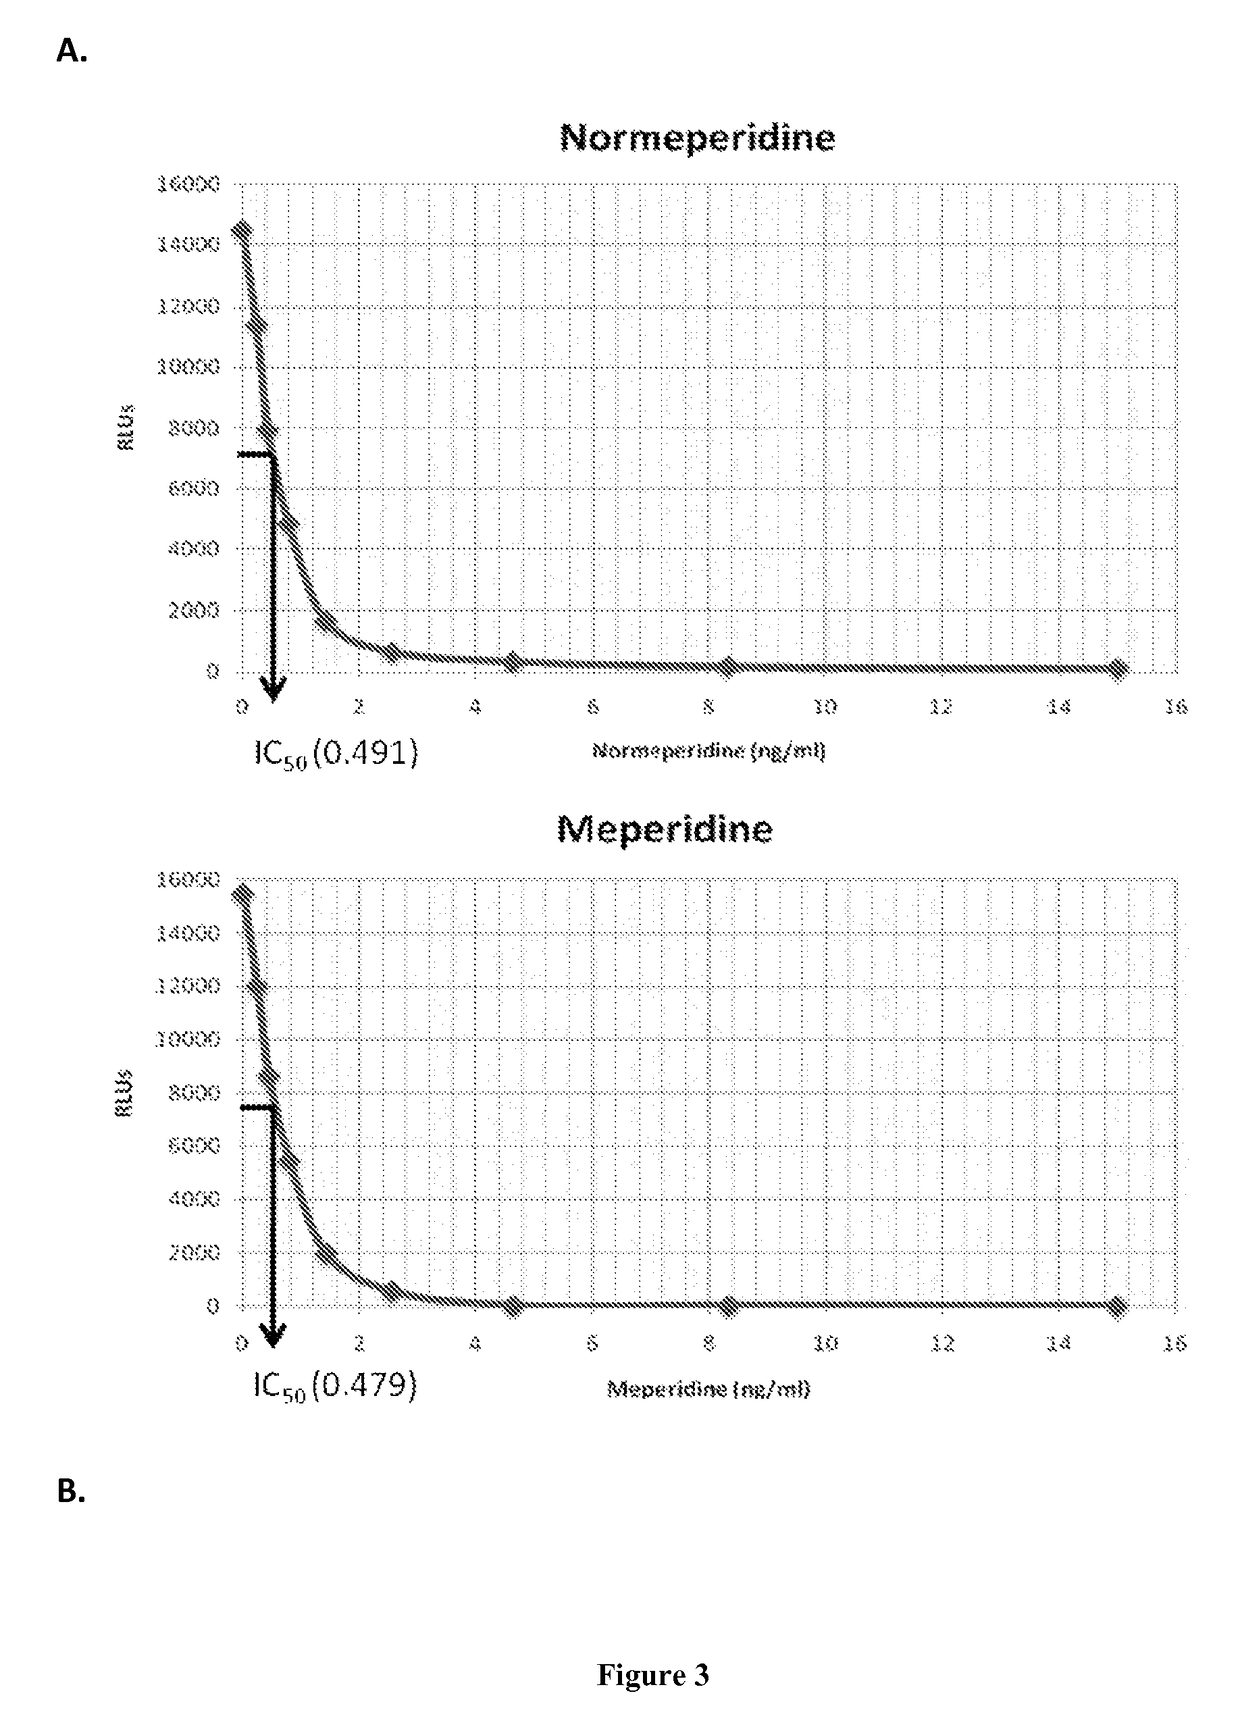 Immunoassays for meperidine and metabolites